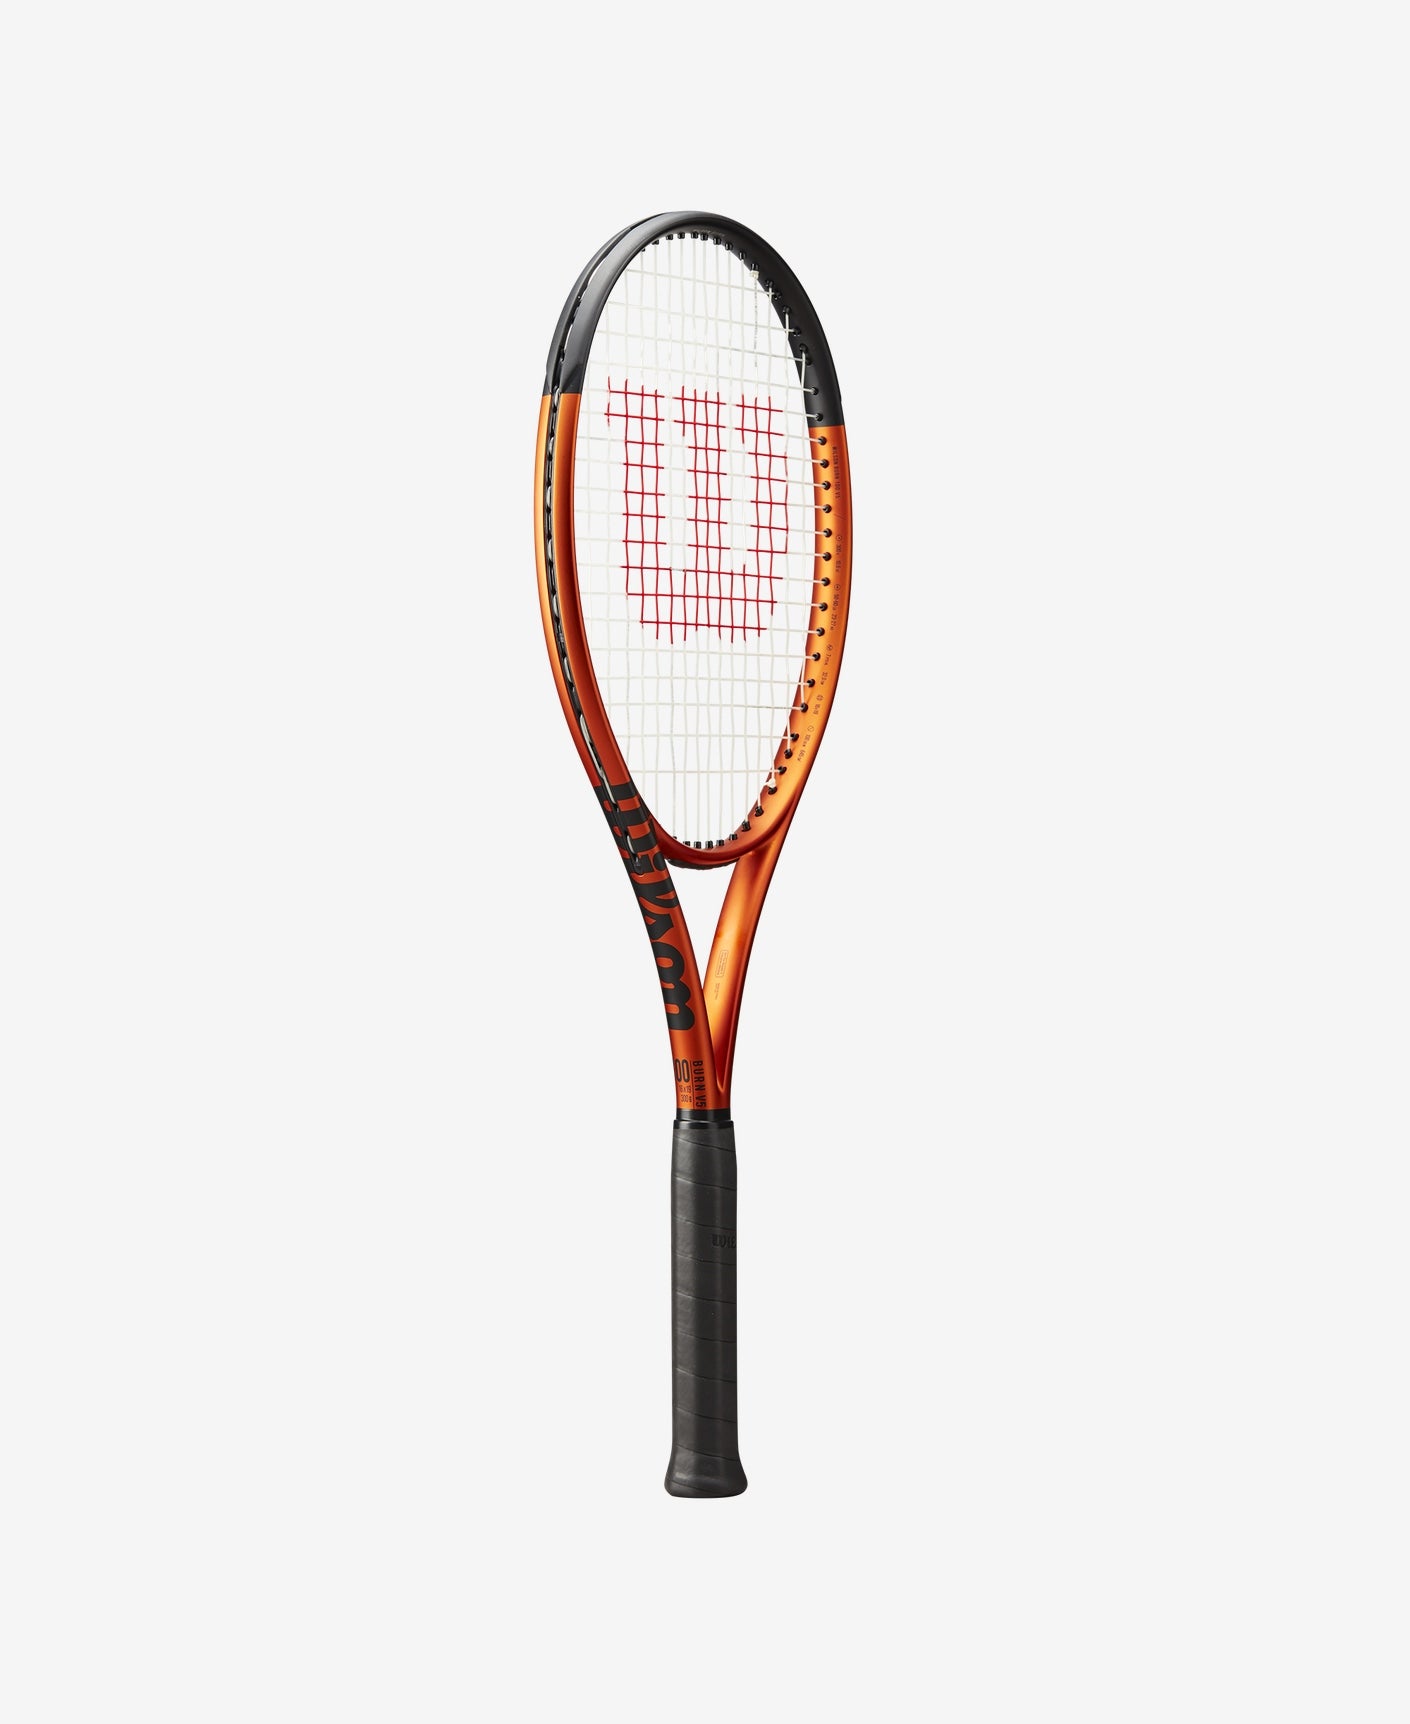 Wilson Burn 100 v5 Tennis Racket with High-Performance Carbon Fiber Construction